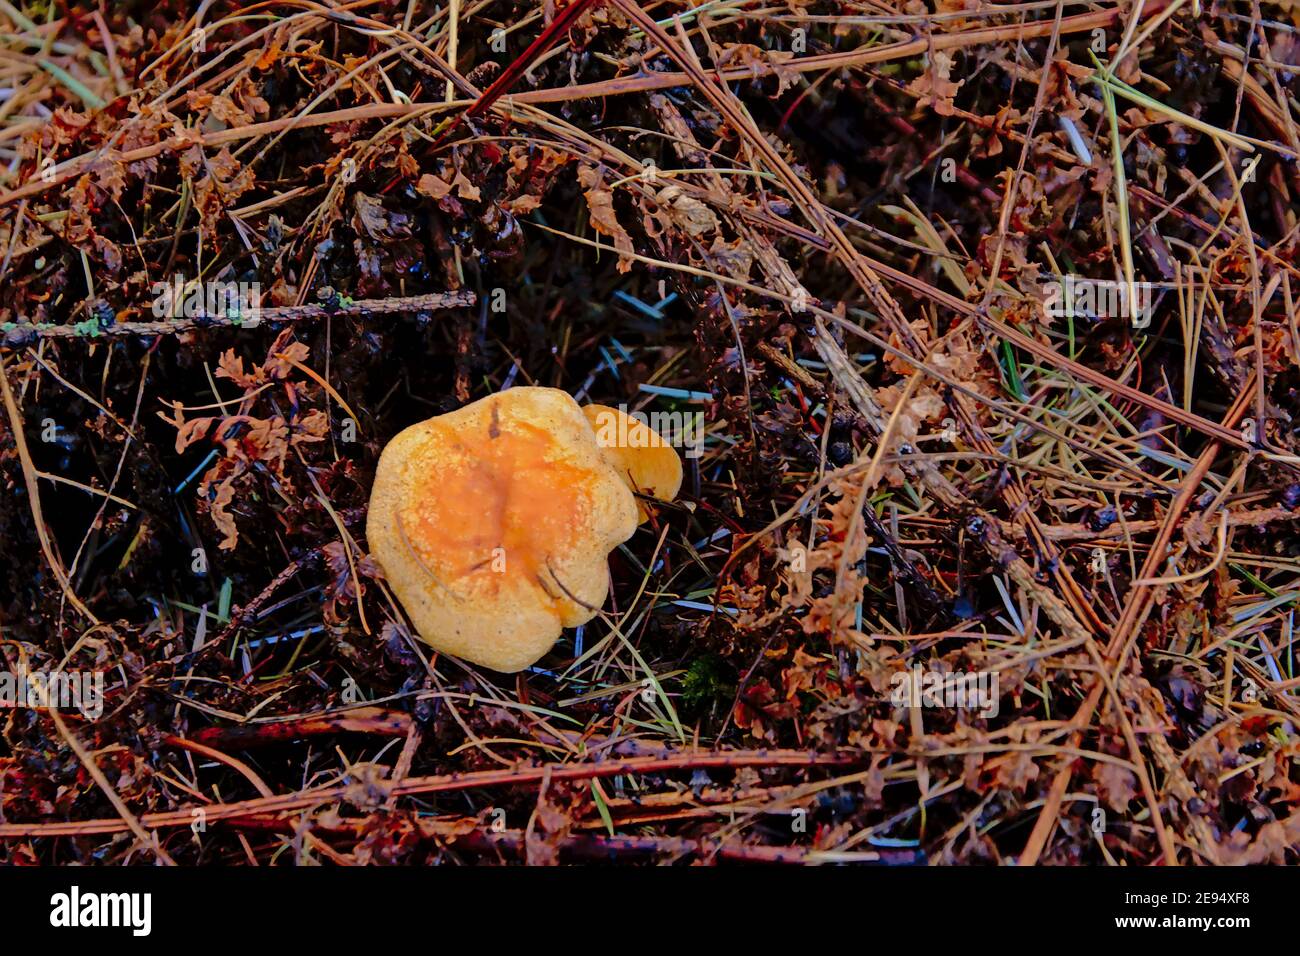 False chanterelle mushroom on the forest floor, overhead view - Hygrophoropsis aurantiaca Stock Photo